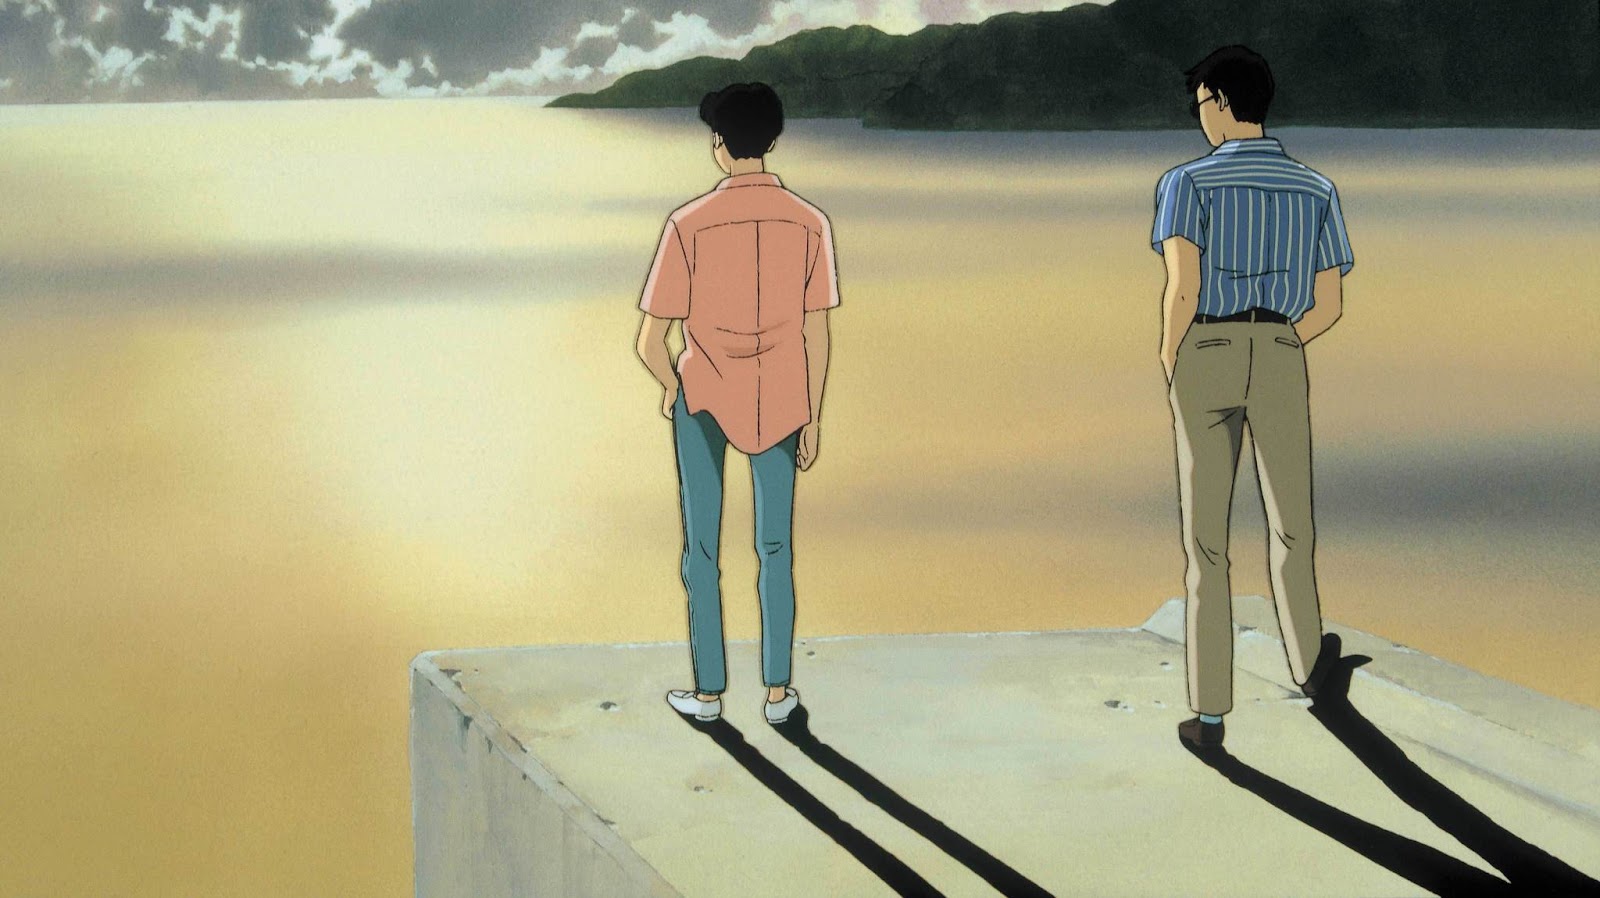 Studio Ghibli Films Theatrical Release